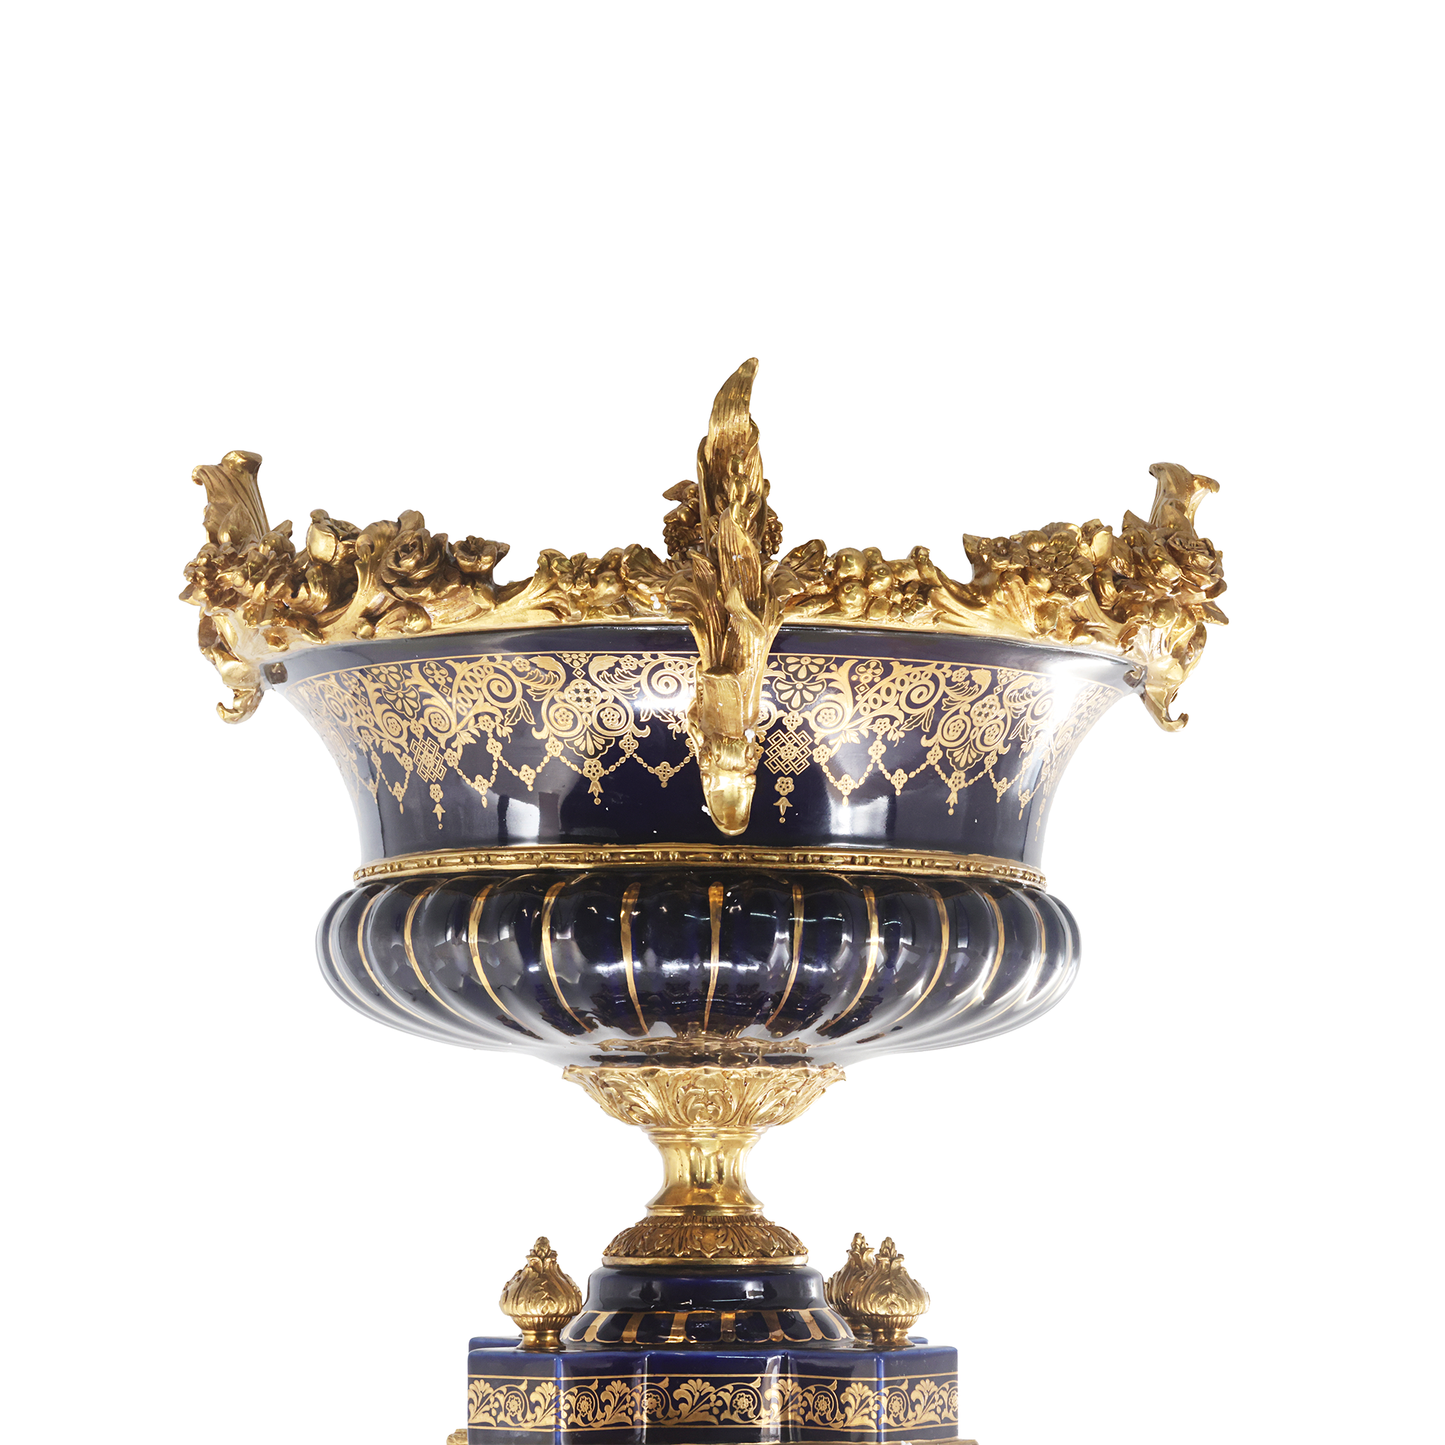 Ornate Bronze and Porcelain Hand-painted Decorative Bowl & Pedestal